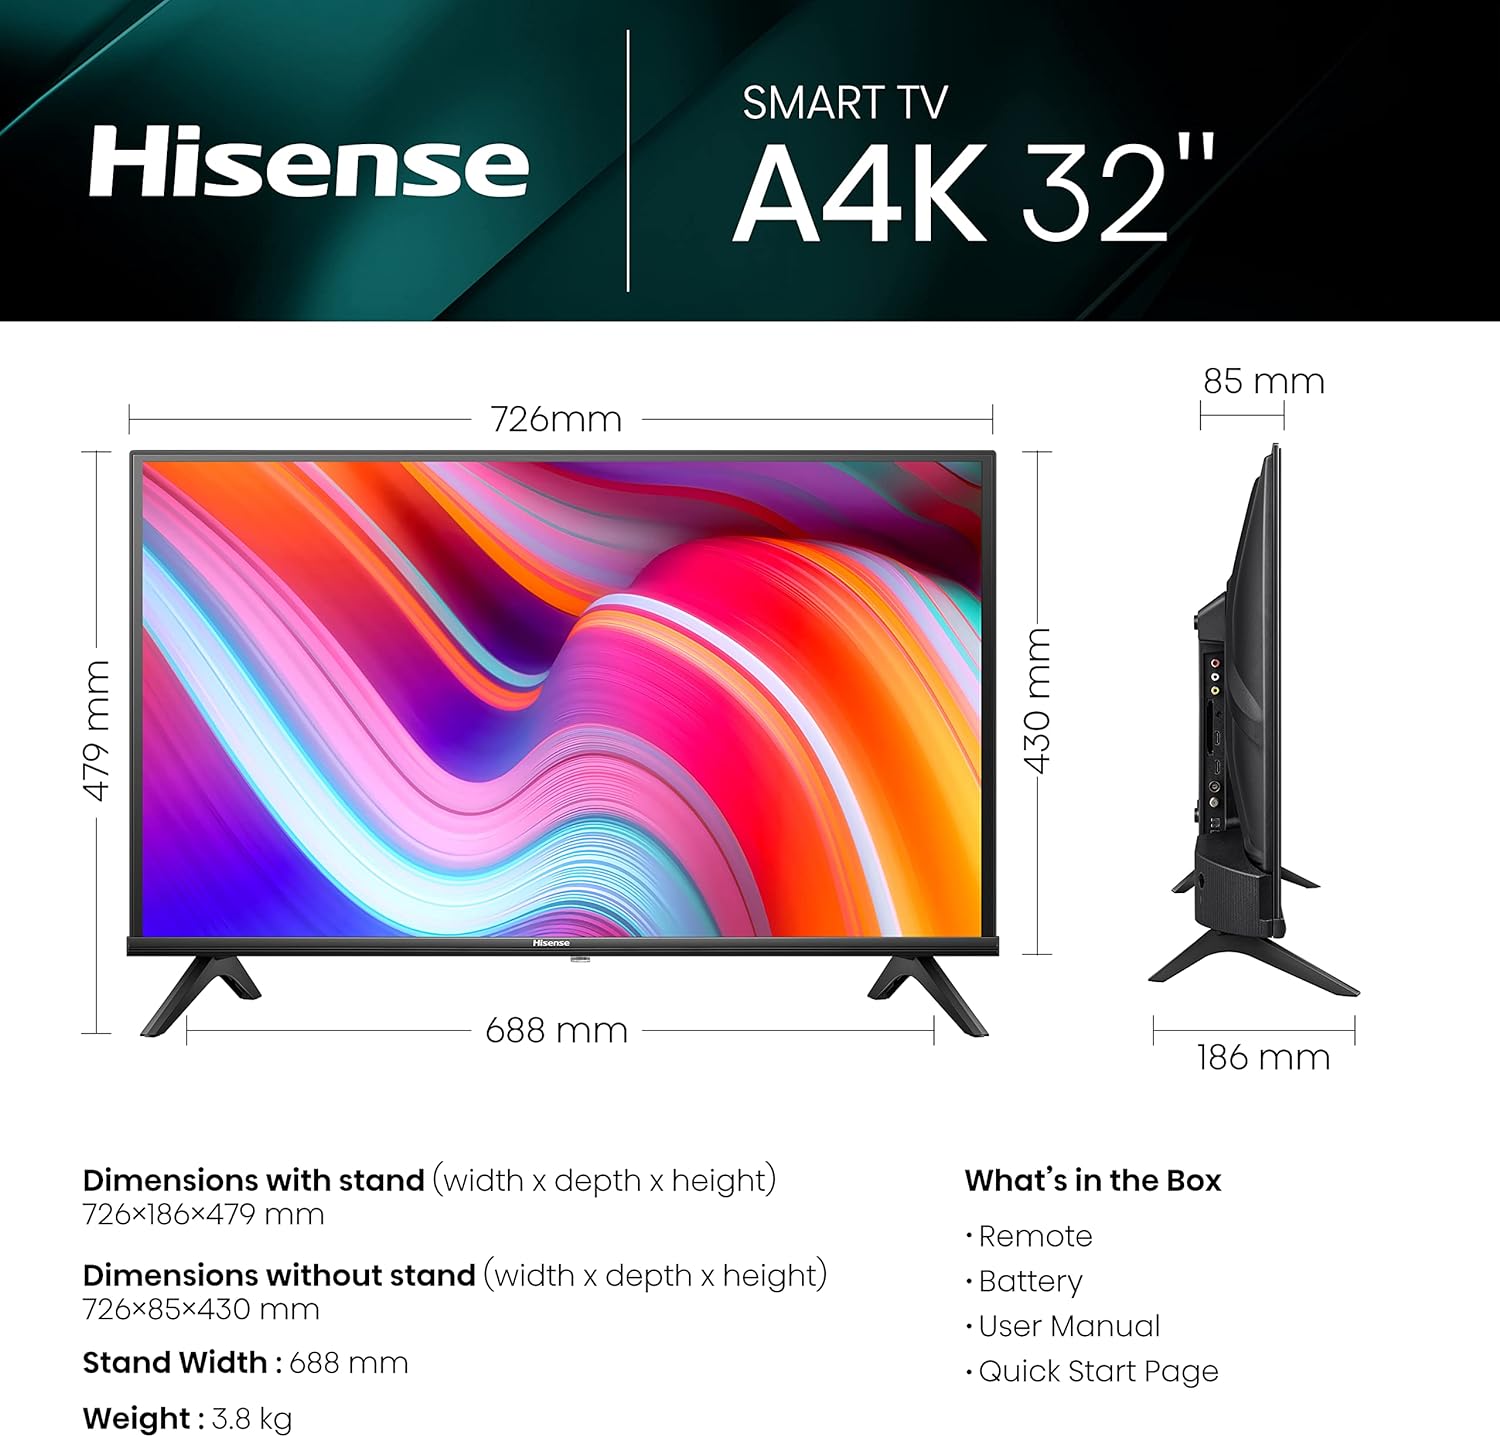 Hisense A4K 32" FHD Google Smart TV